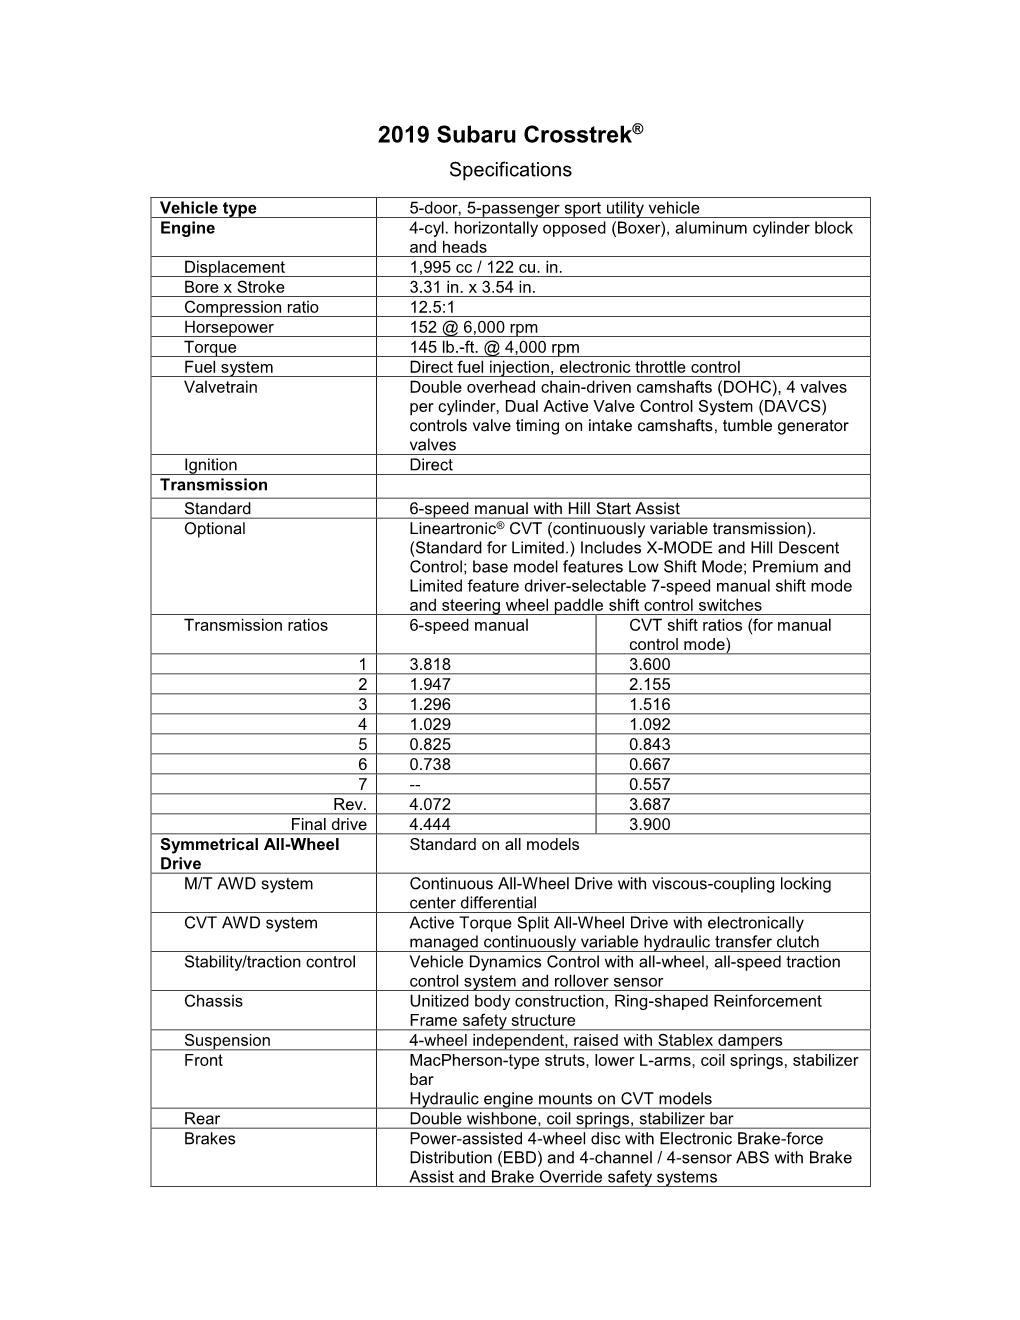 2019 Subaru Crosstrek® Specifications